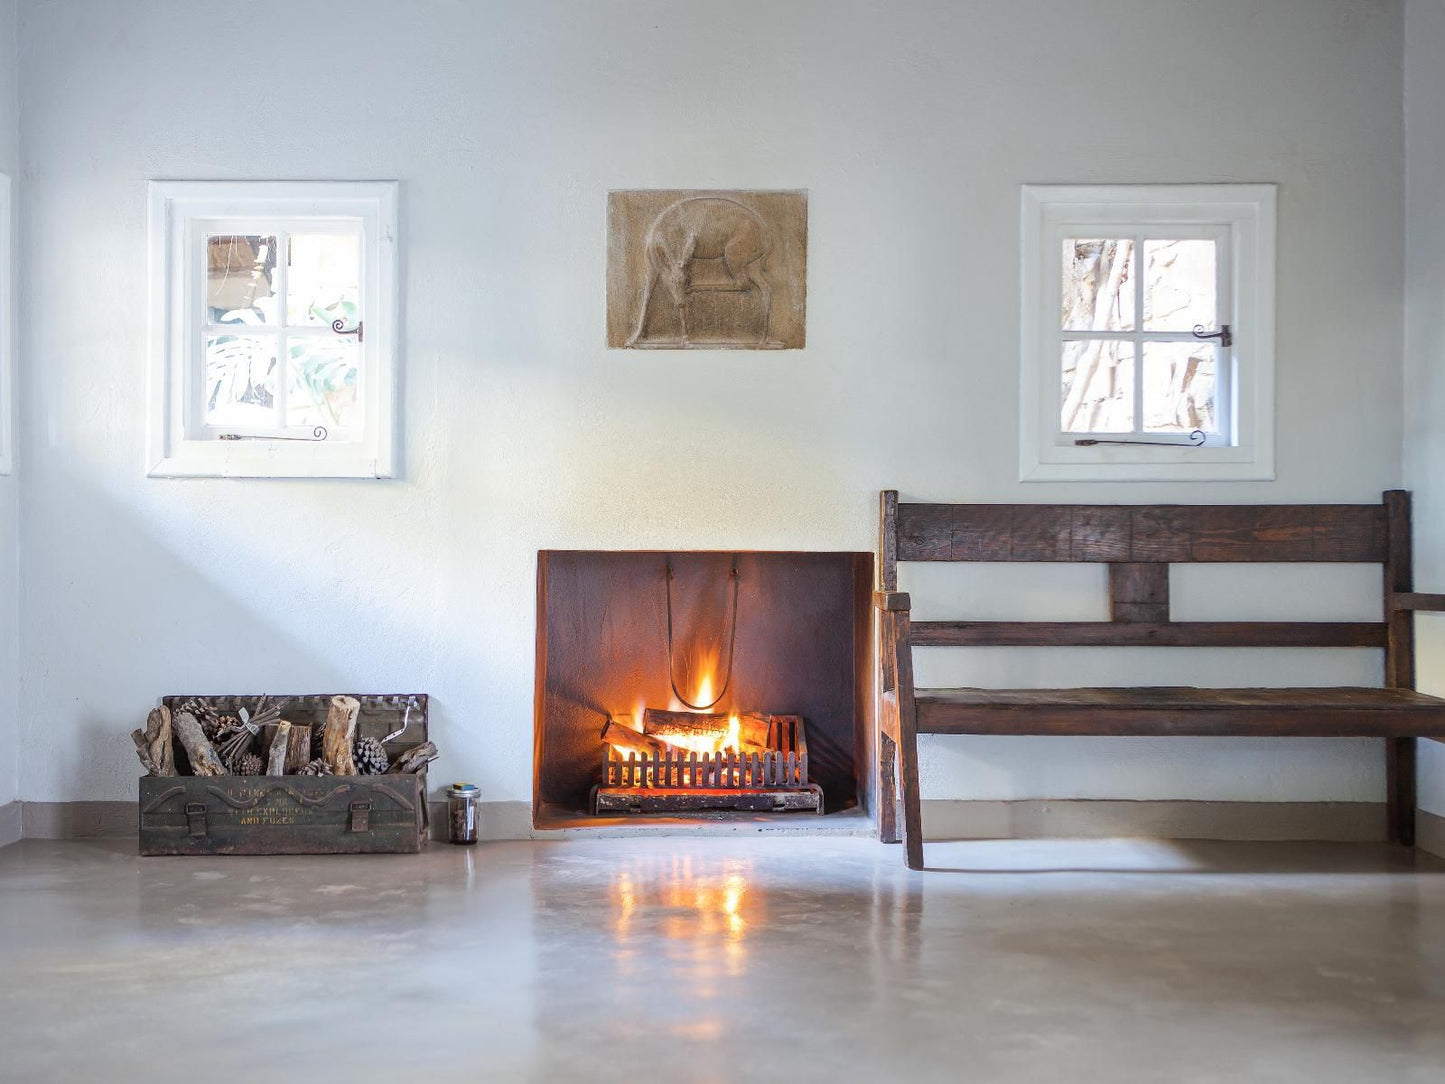 Pierneef S Kraal Lynnwood Manor Pretoria Tshwane Gauteng South Africa Fire, Nature, Fireplace